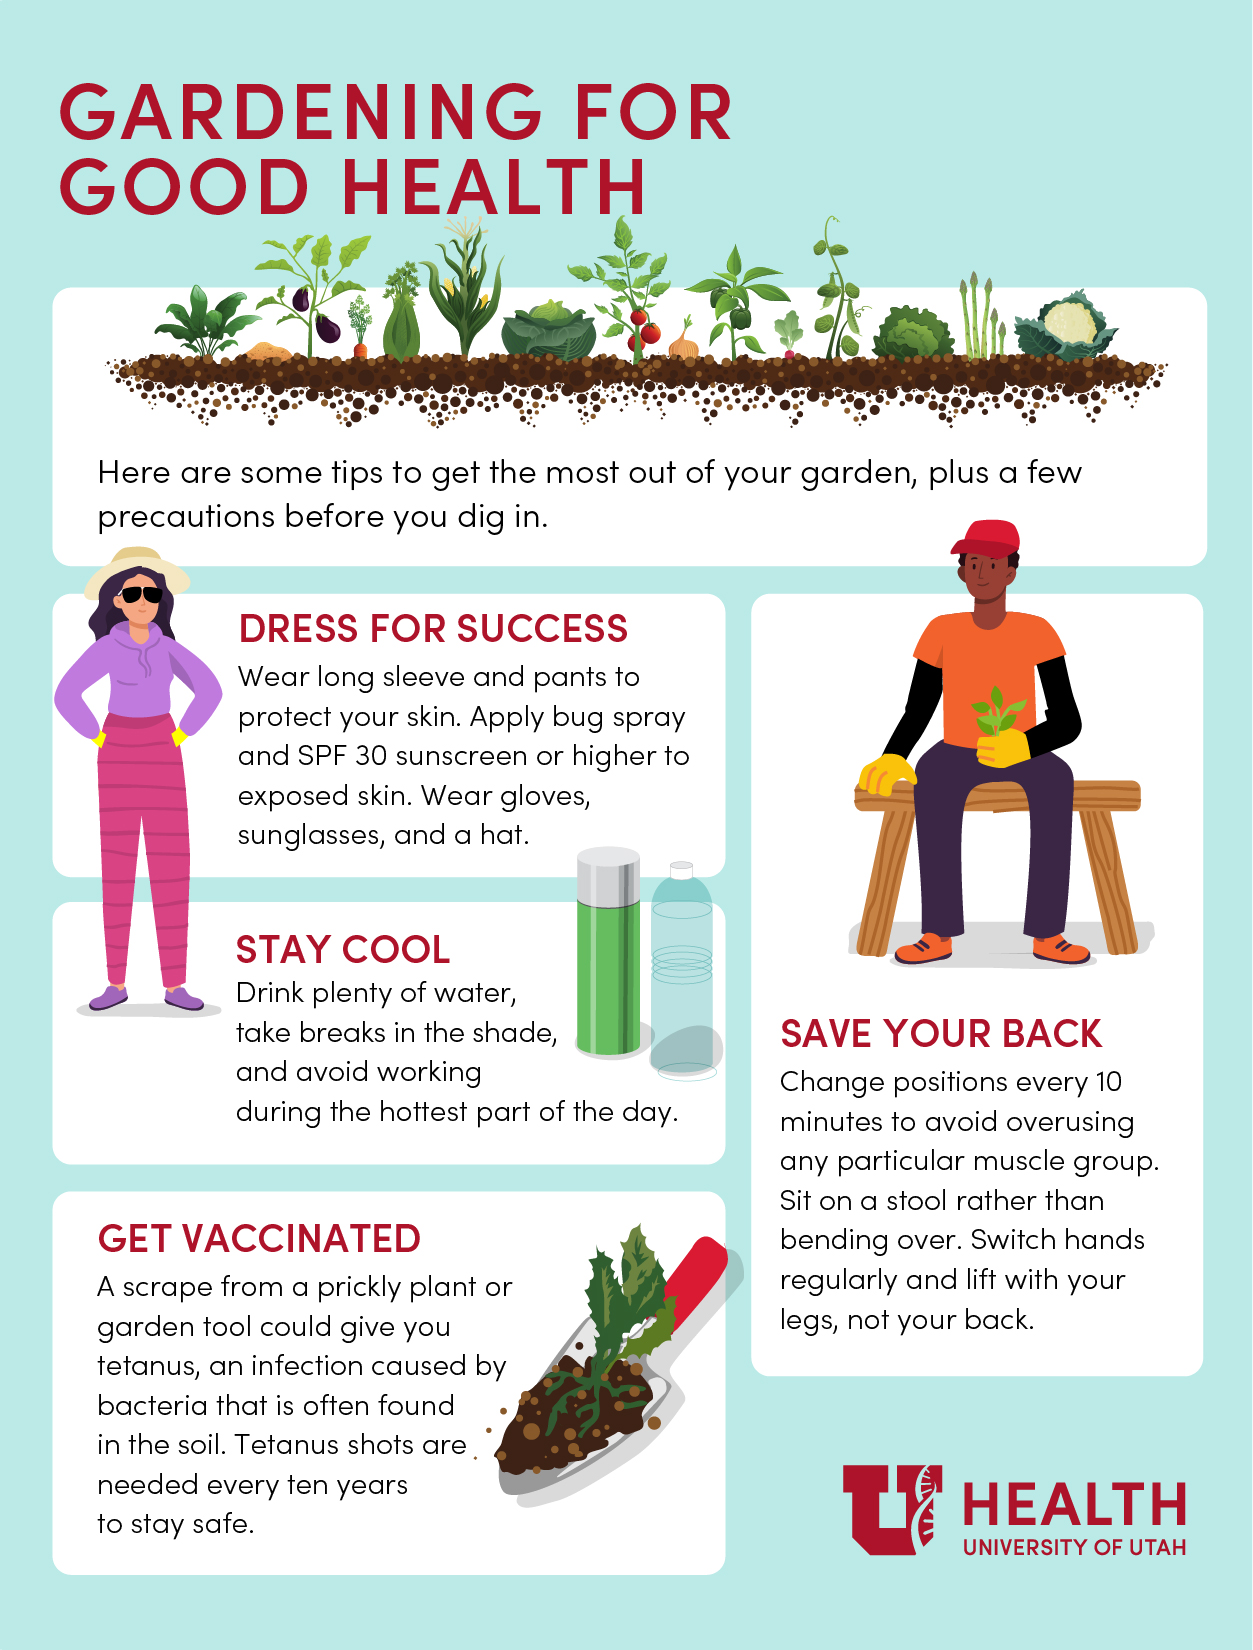 Gardening for good health